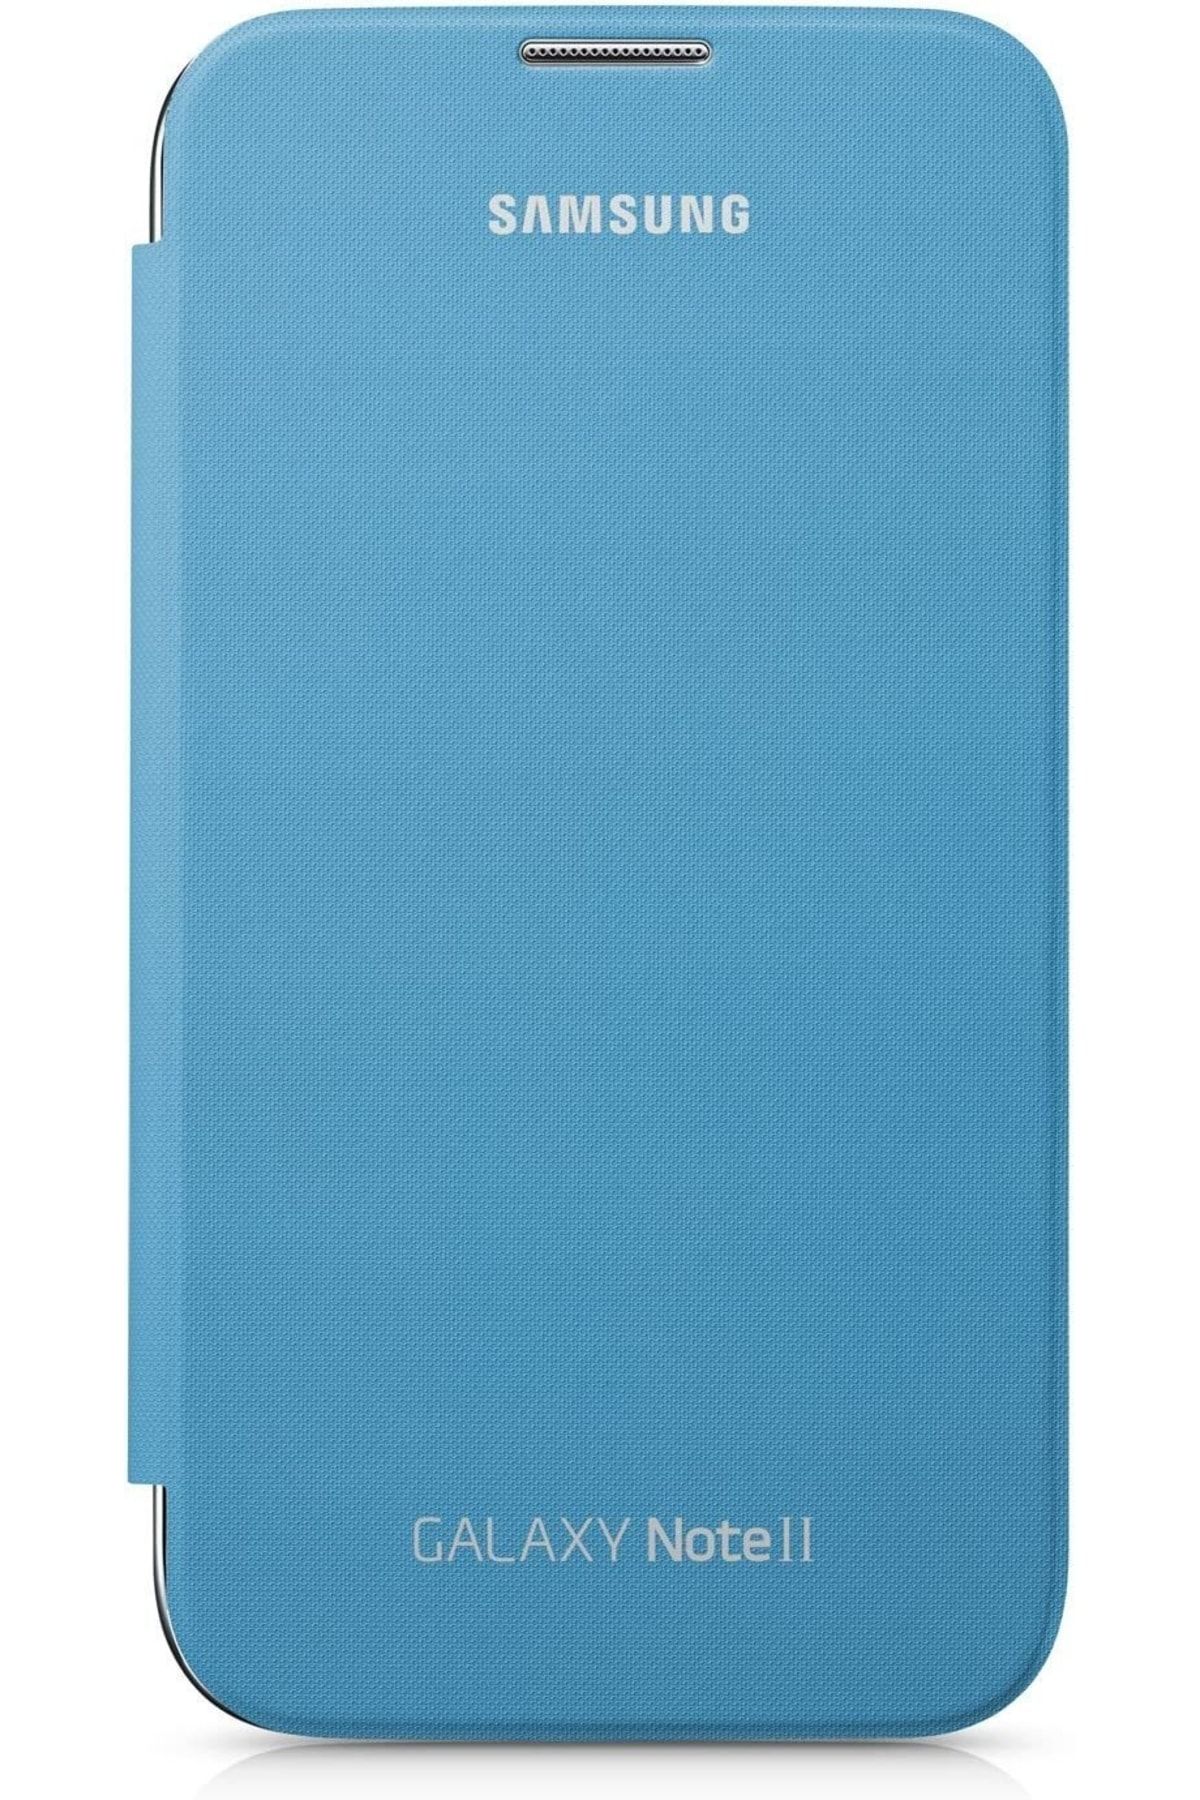 Samsung Note2 Flip Cover Kılıf Mavi Efc-1j9fbegstd